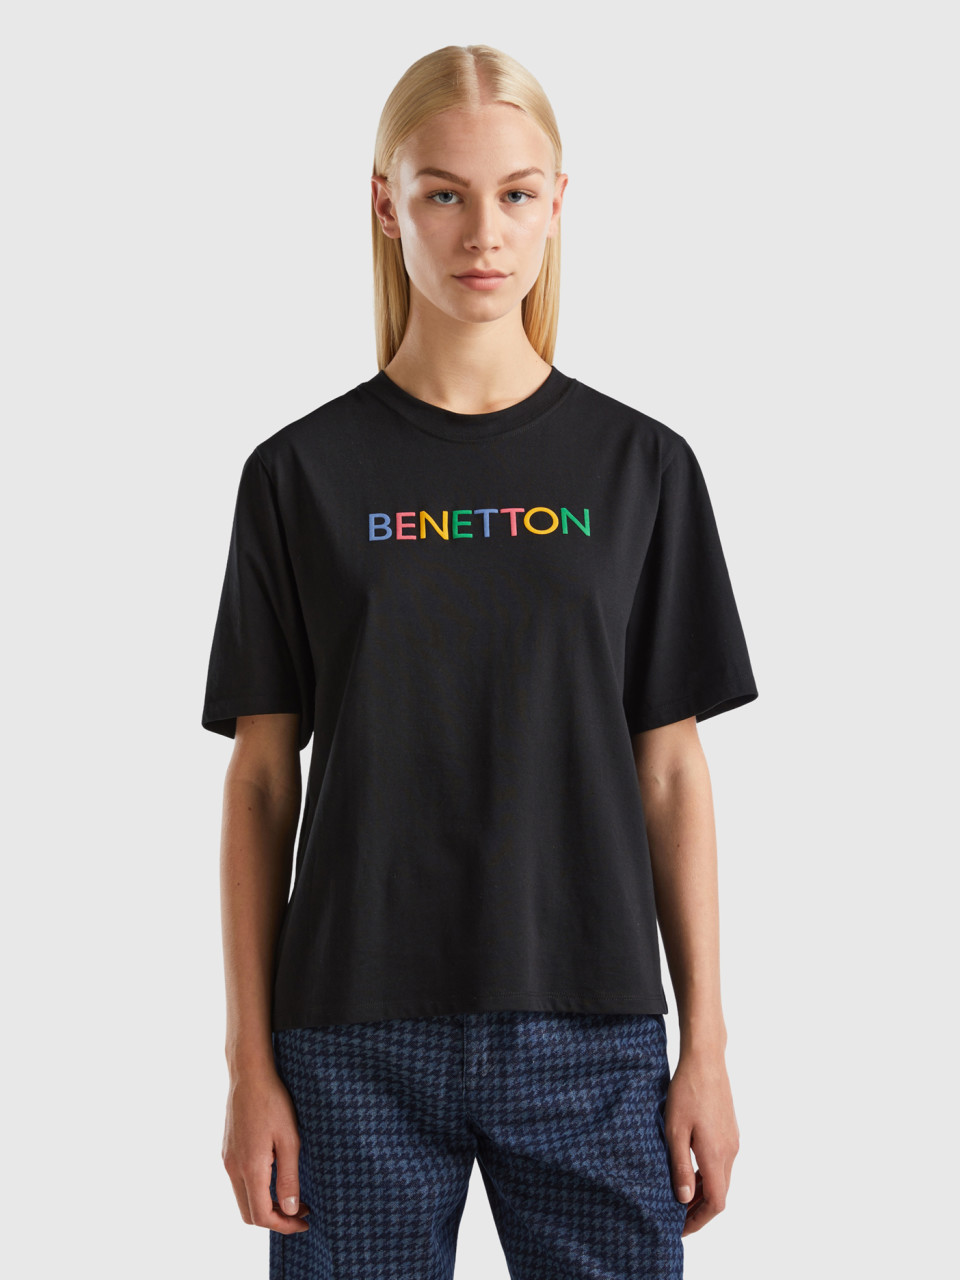 Benetton, T-shirt With Logo Text, Black, Women